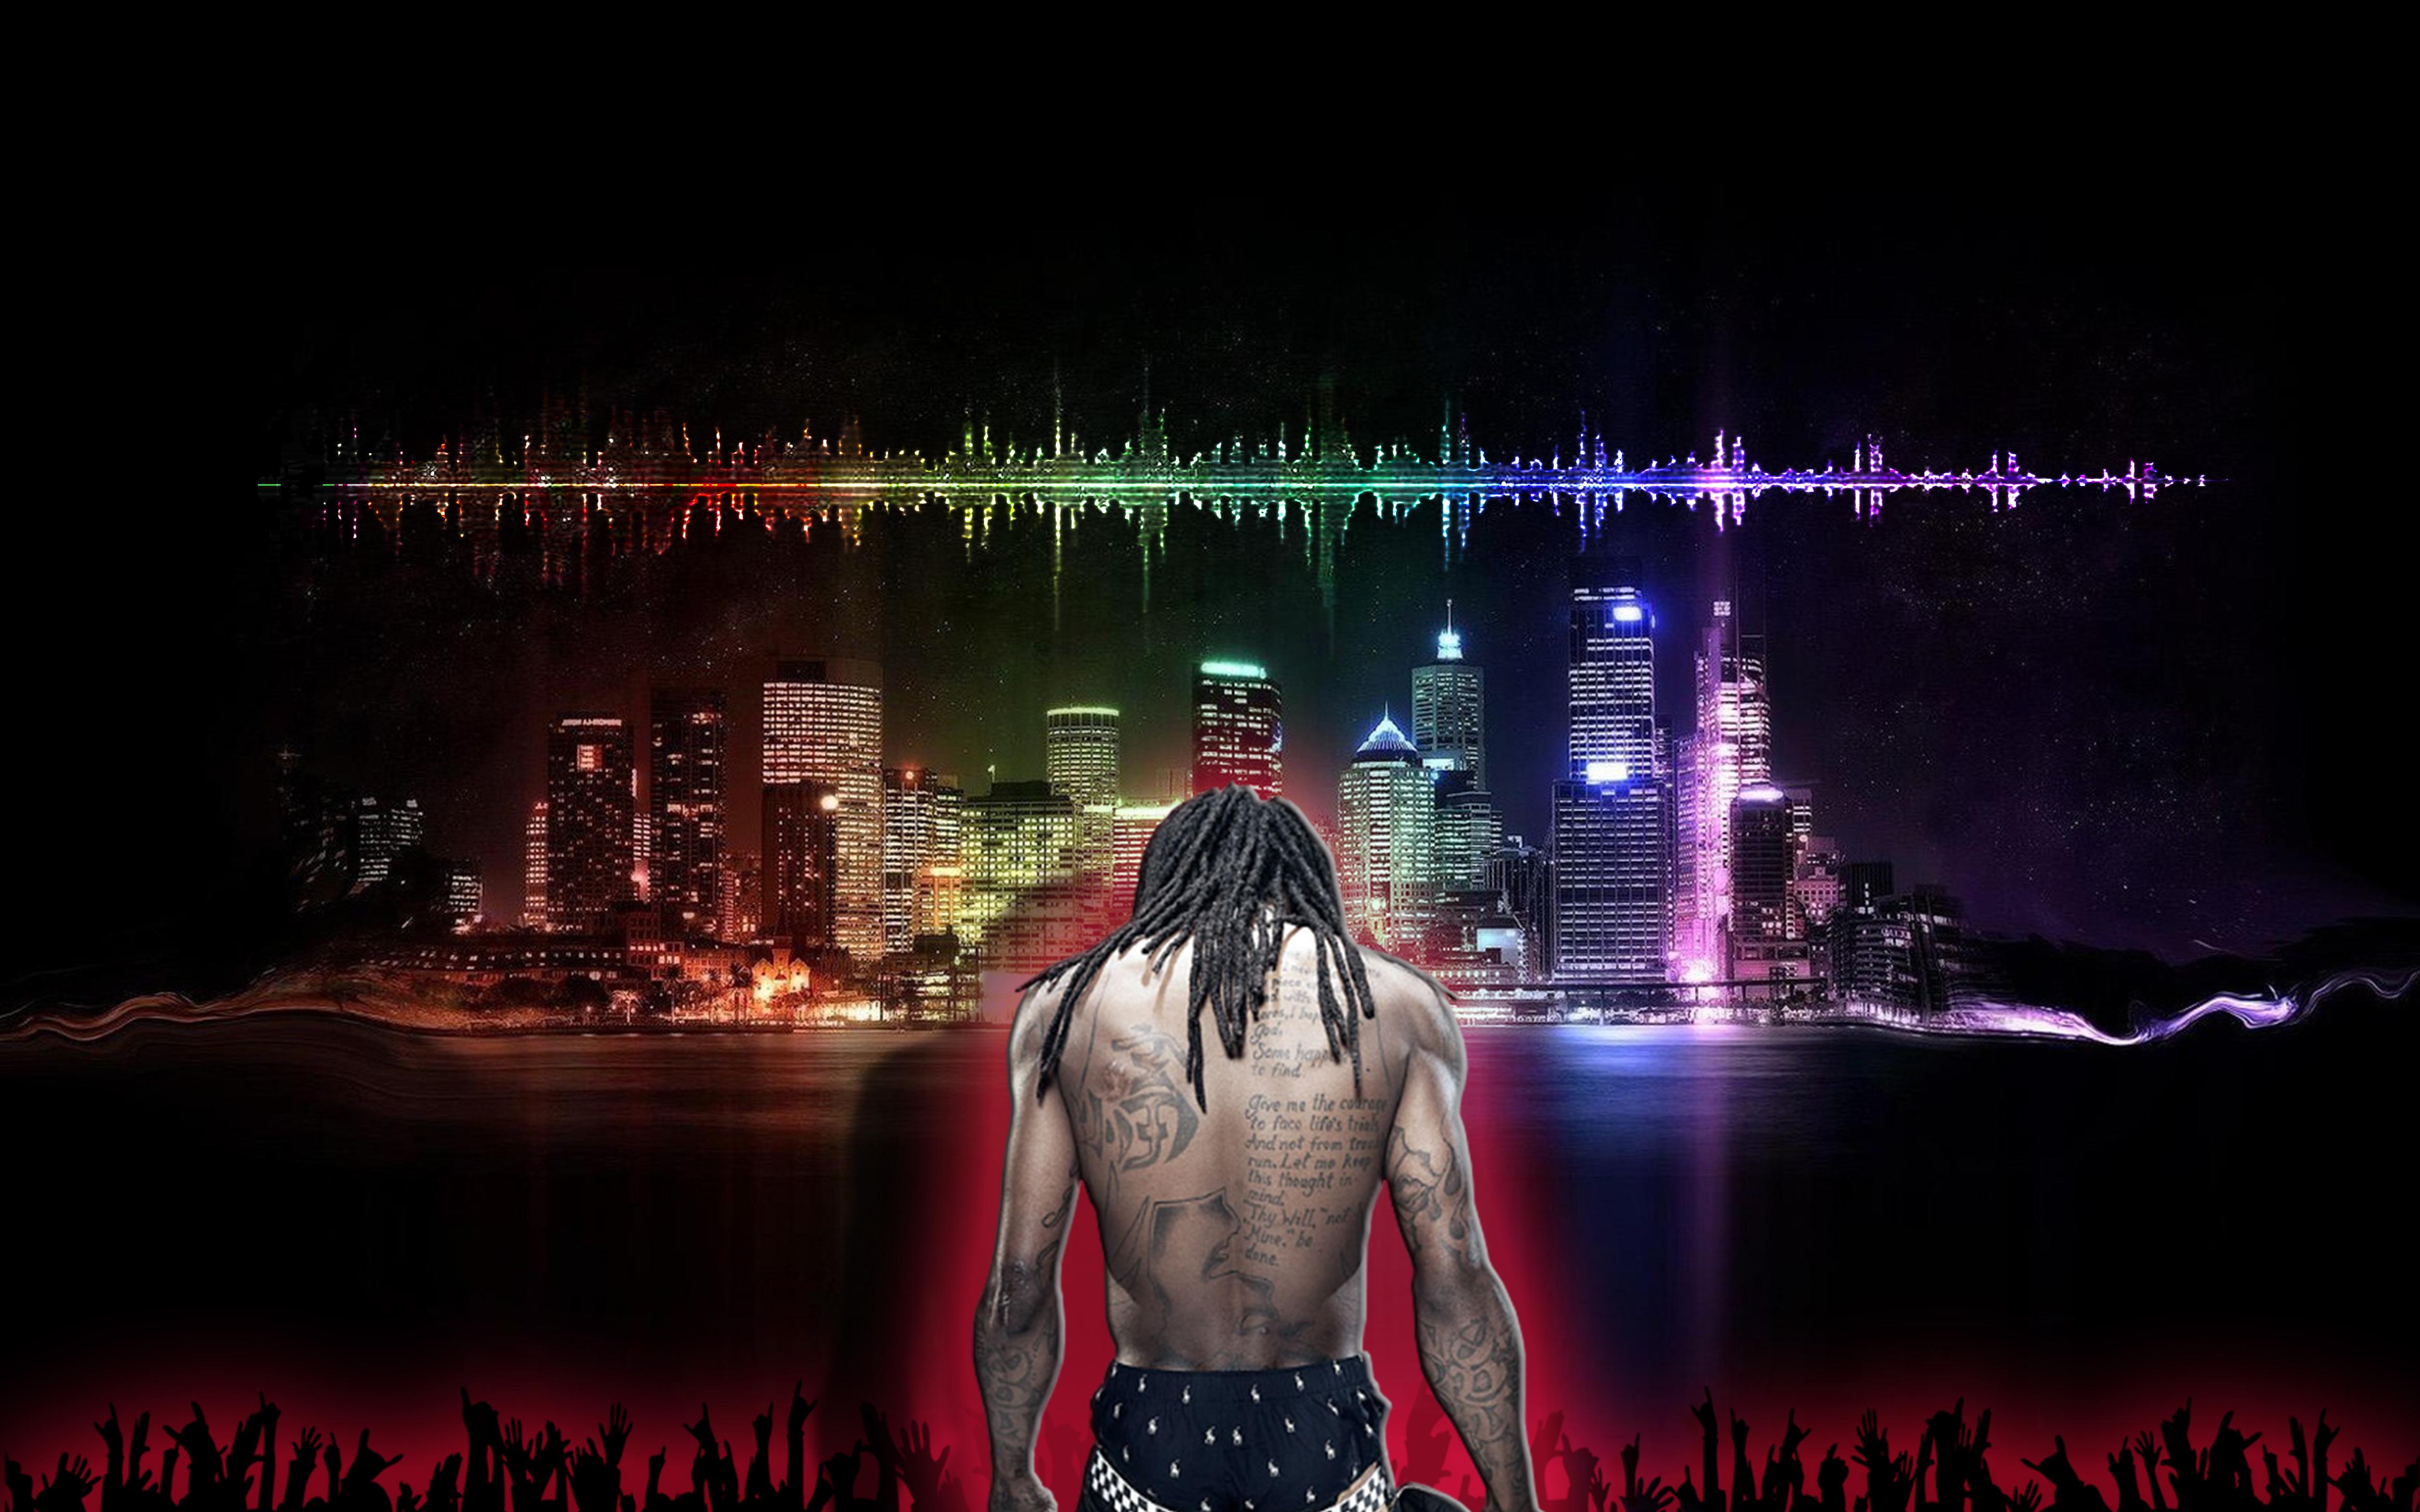 Mobile Wallpaper Lil Wayne 